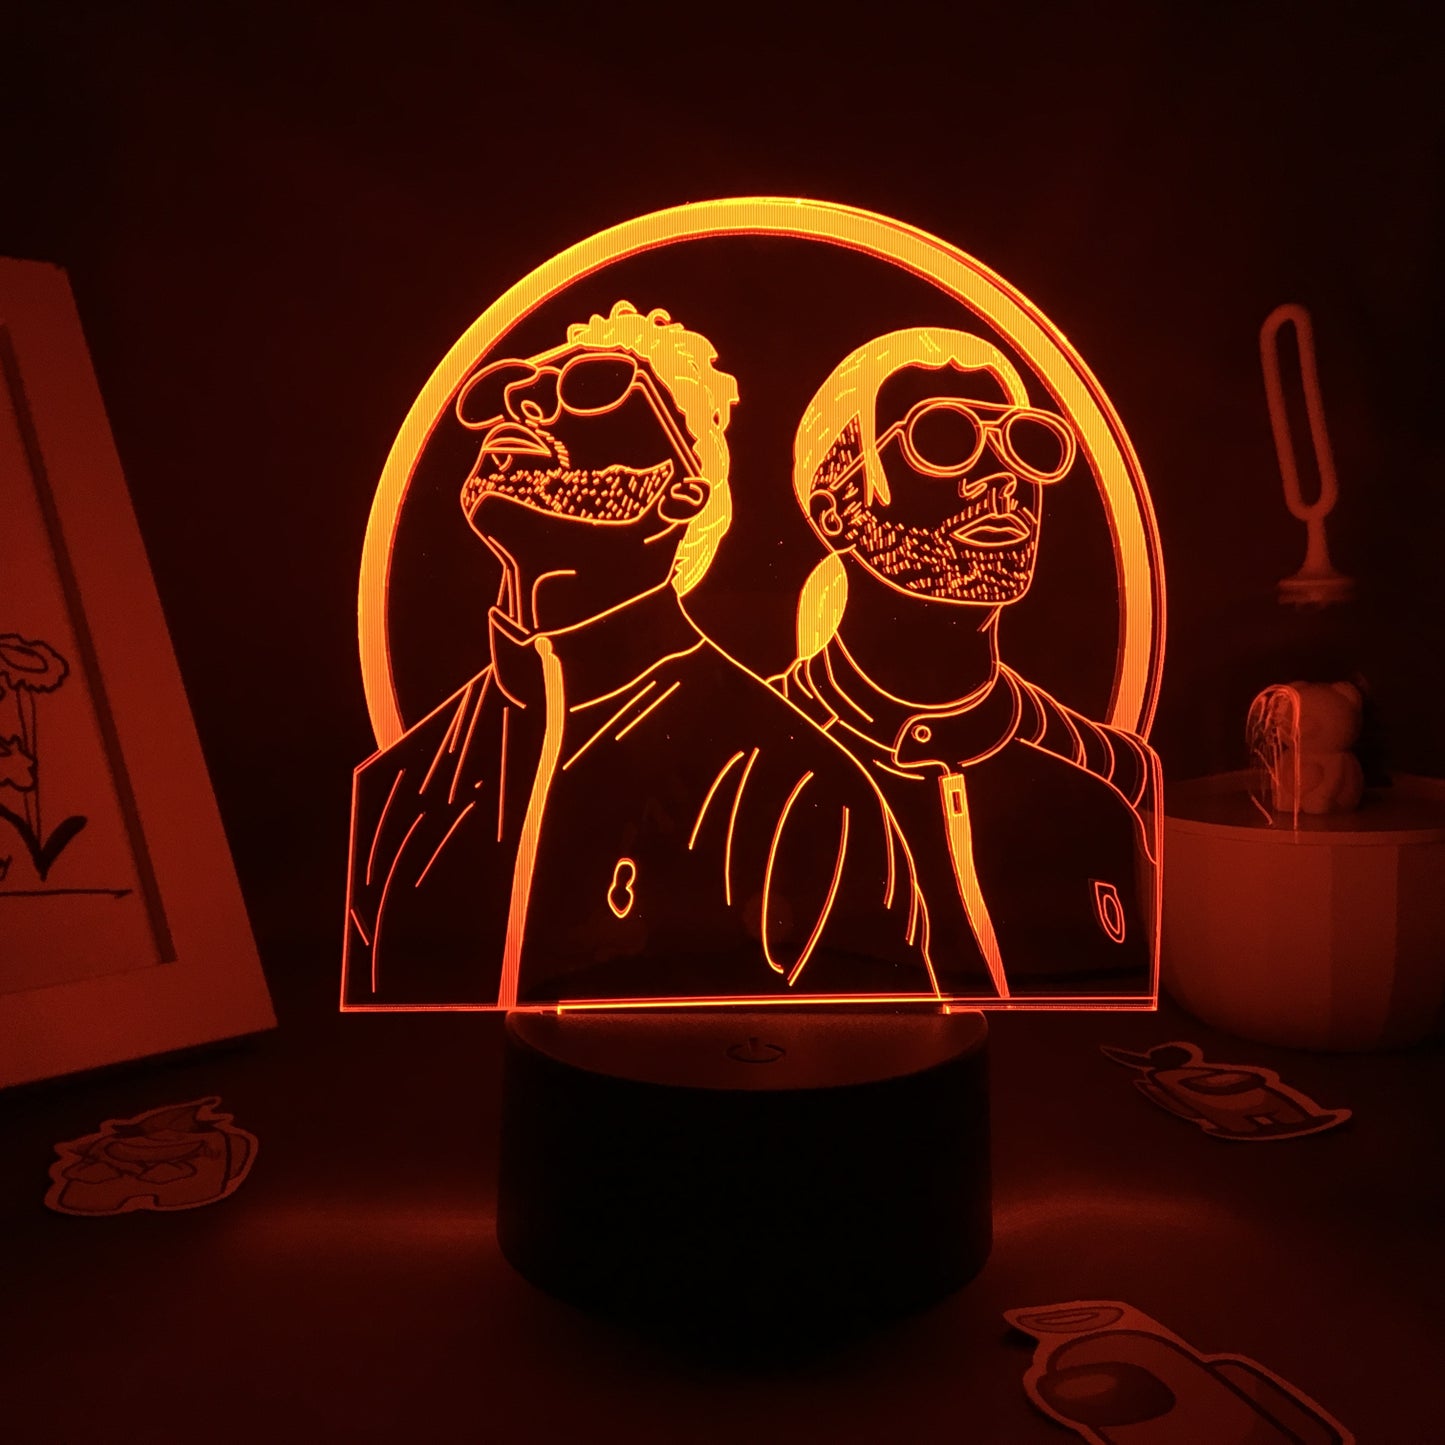 French Rap Group PNL 3D LED Night Light